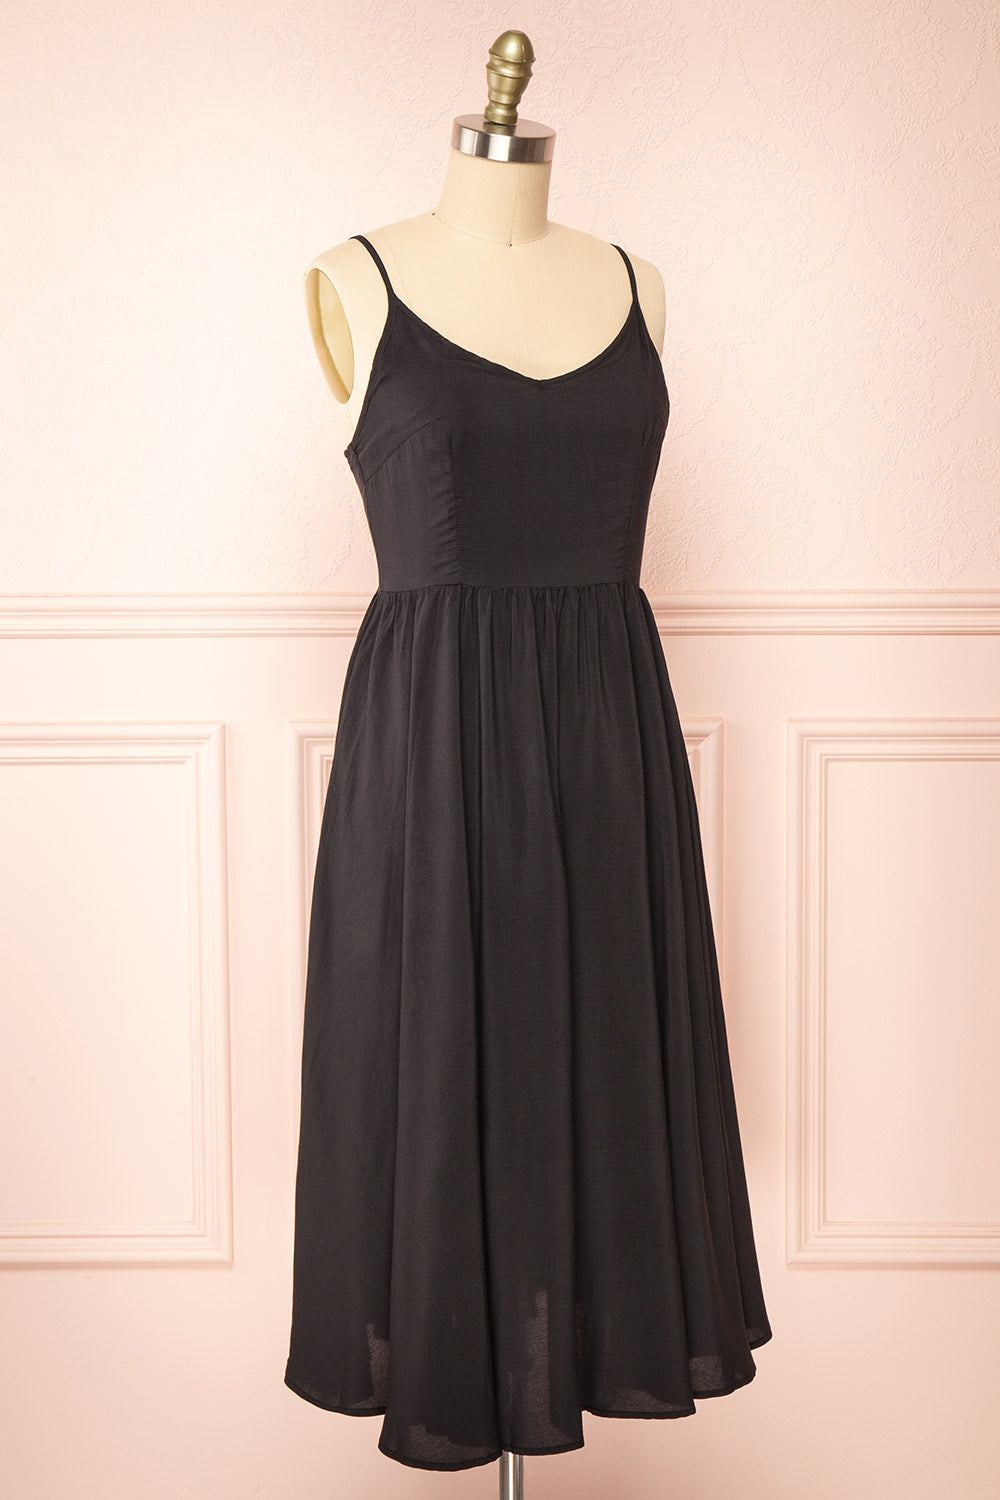 Kloe Black Sleeveless A-line Midi Dress